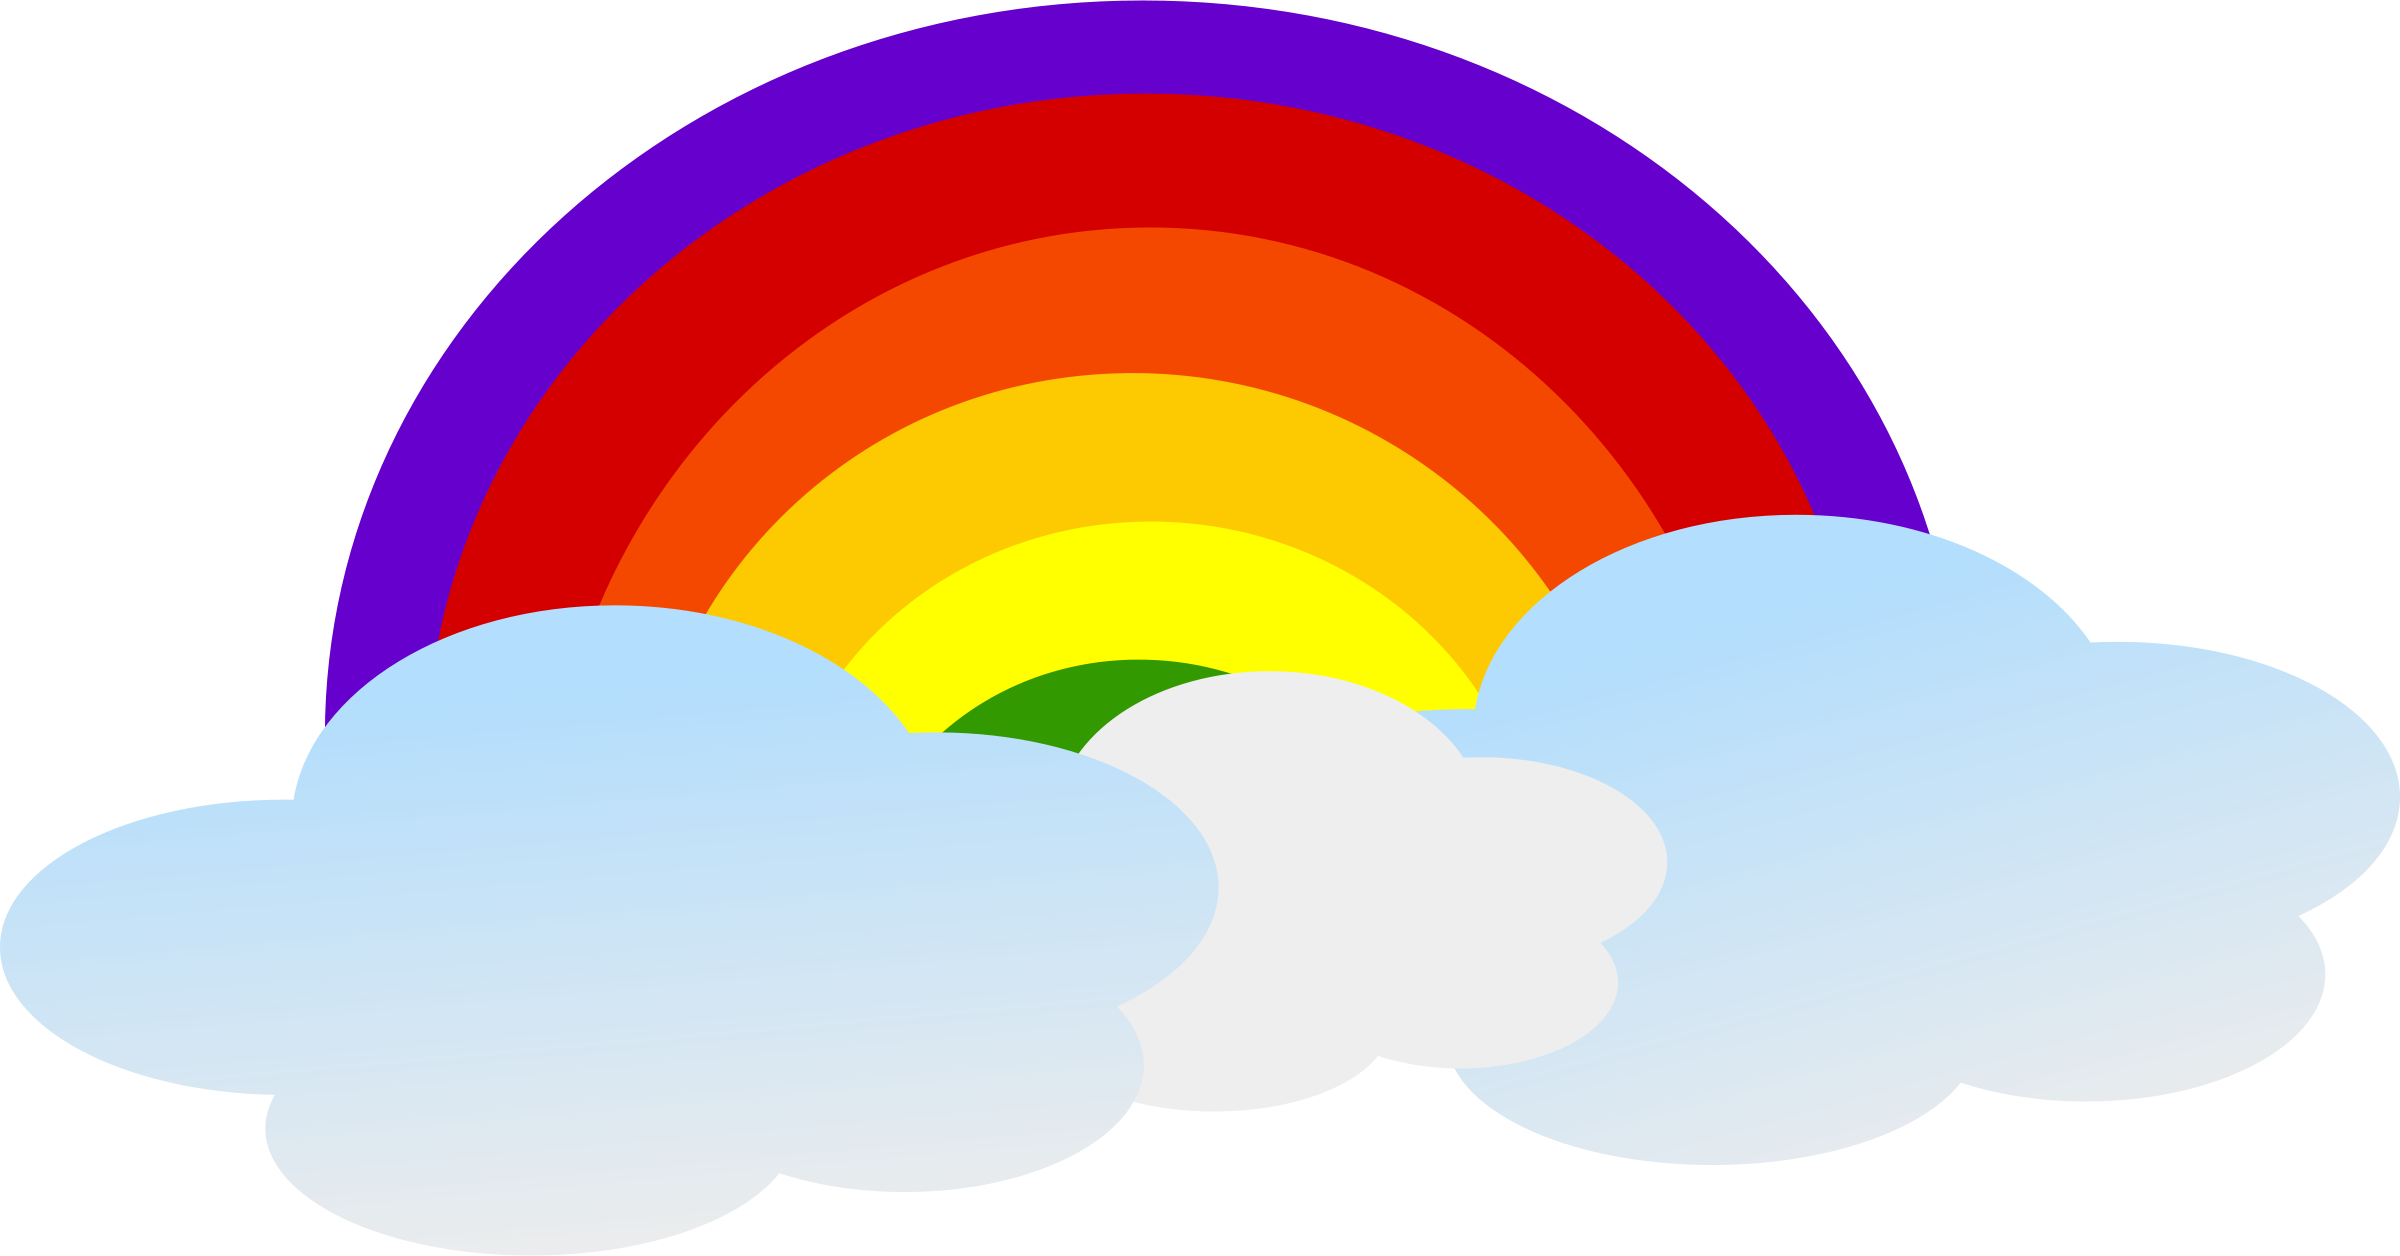 Rainbow clip art images free clipart images clipartcow